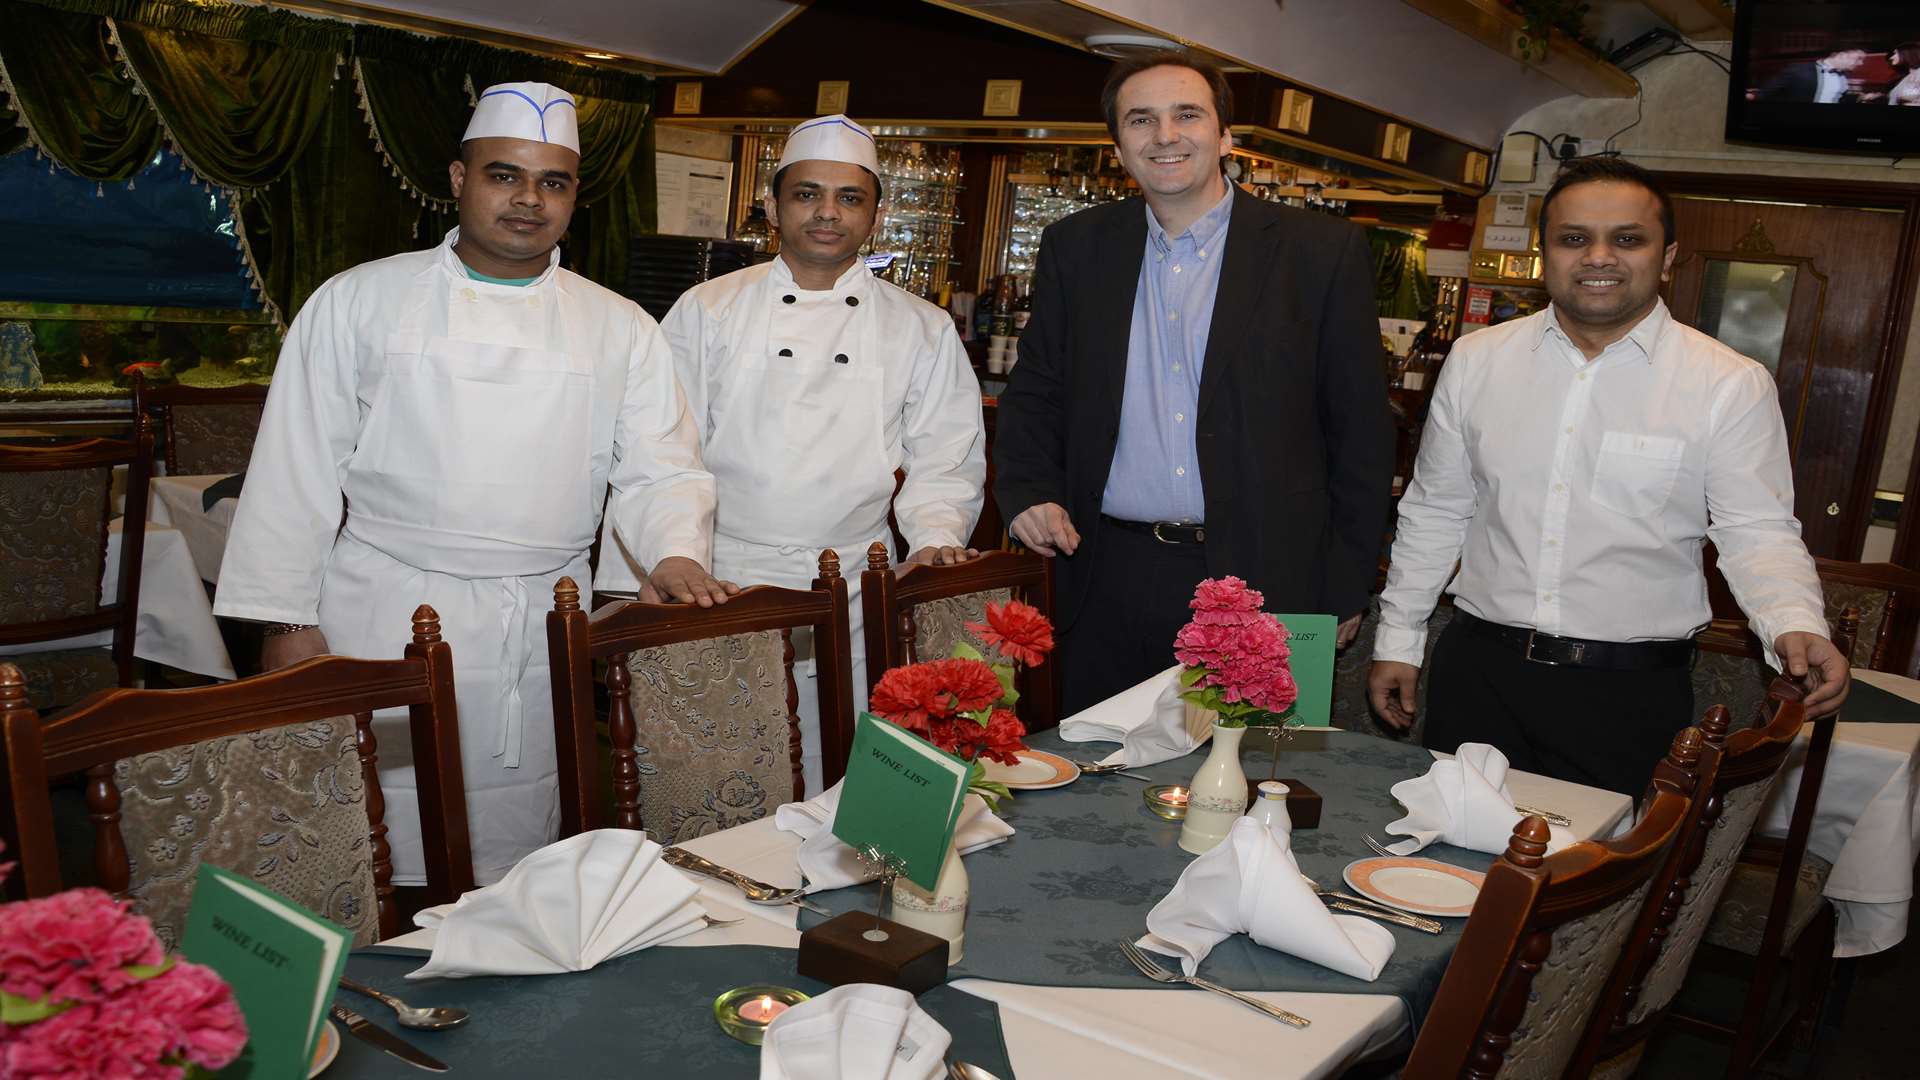 New owner Ian Sleeper with staff Abu Sayem, Ali Liakat and Miah Sabul